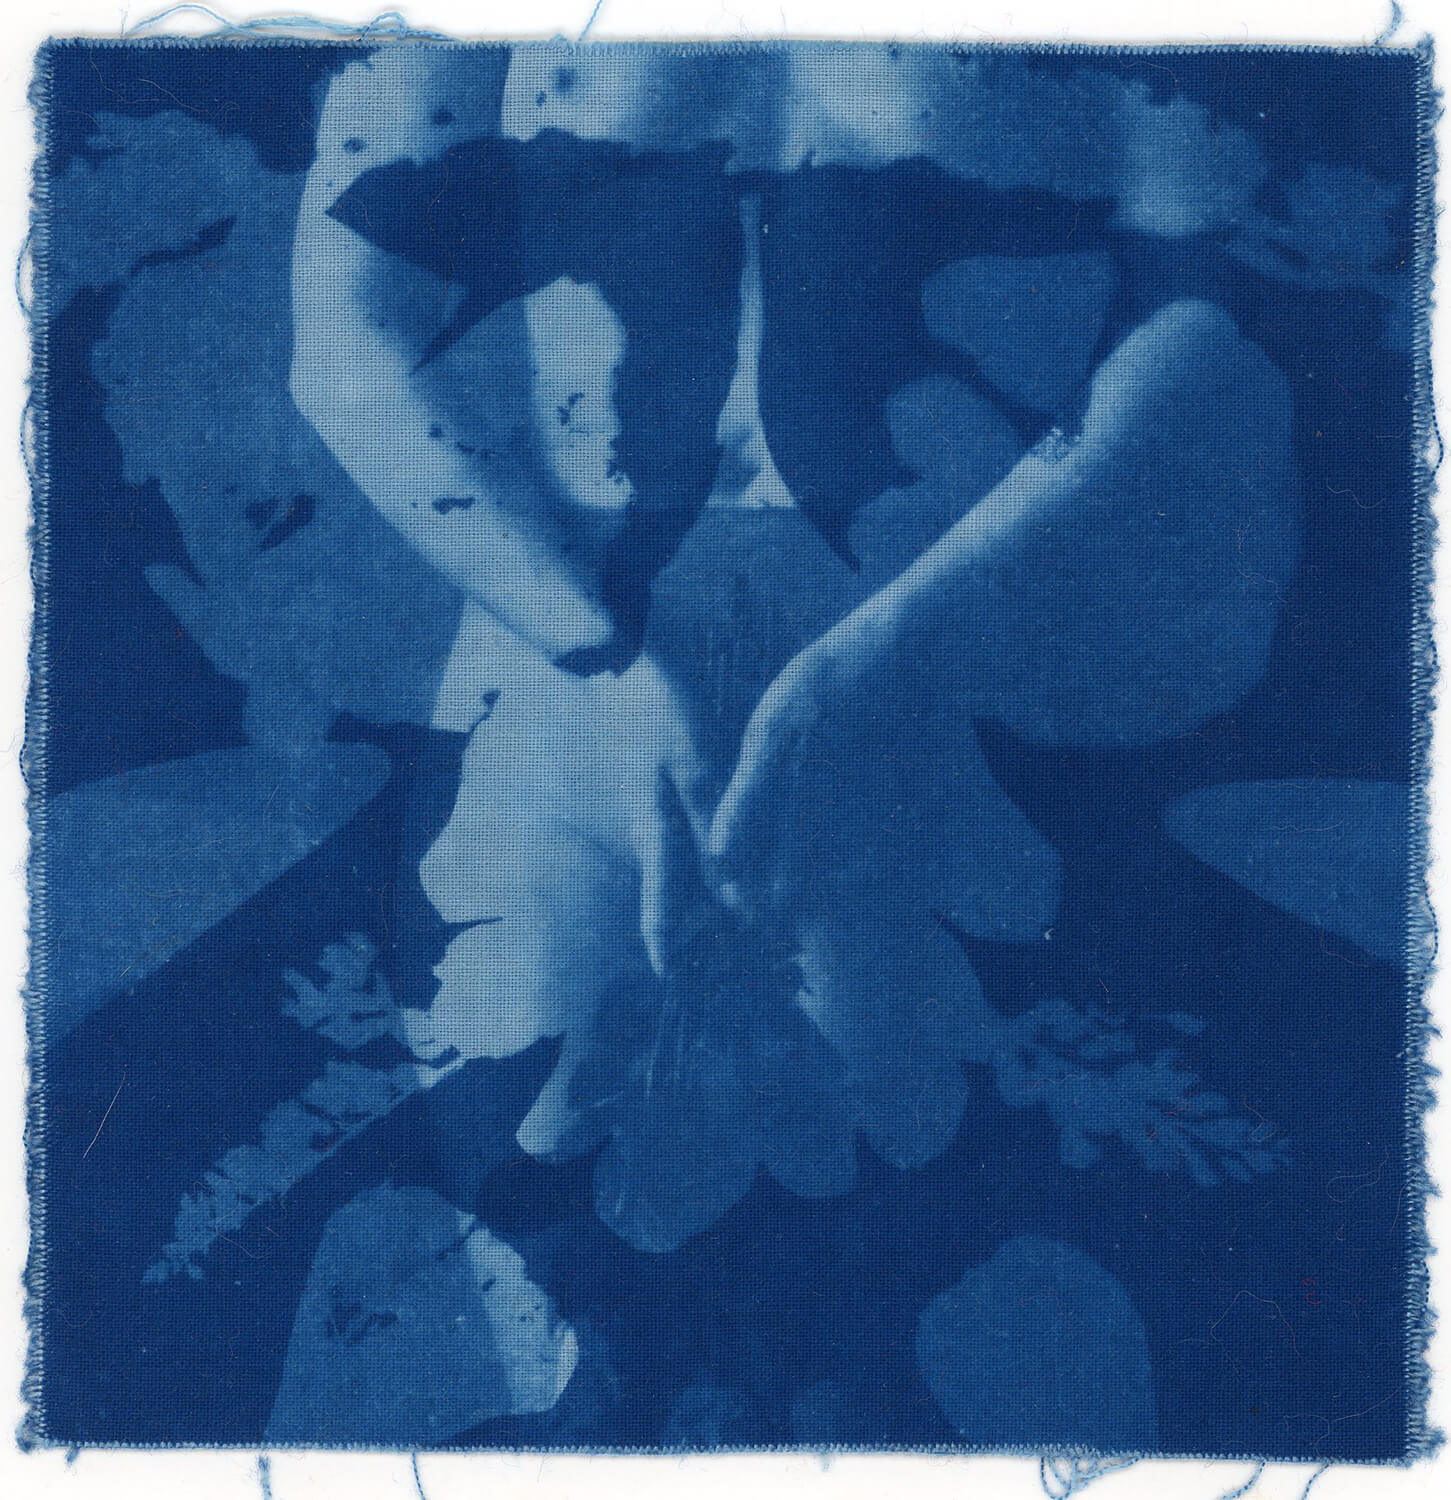 Rorschaach Test, 2021, Cyanotype on Cotton,  15x15cm.  $150